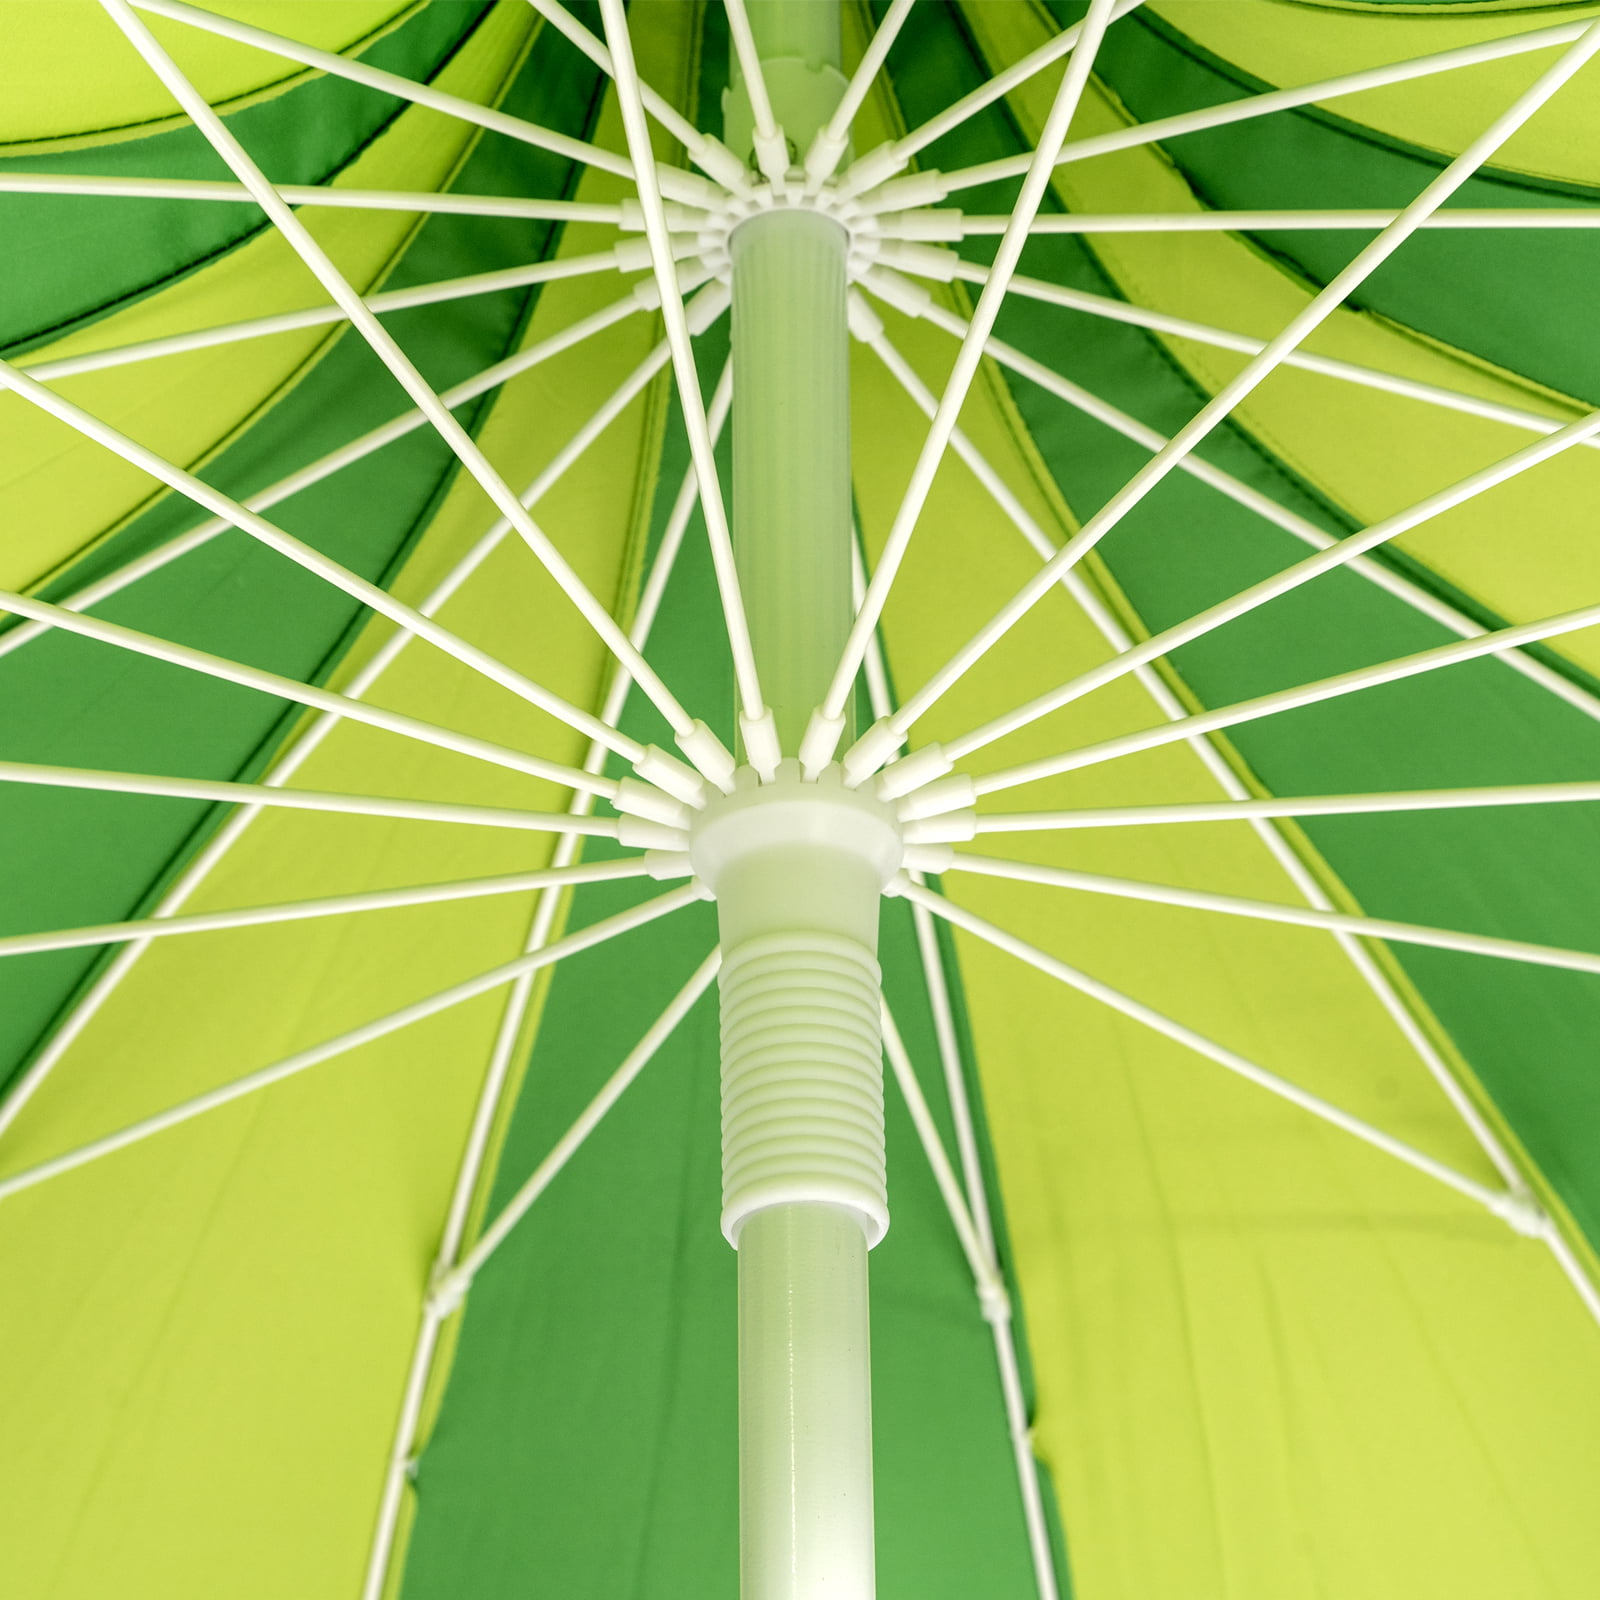 Underside of green and yellow pagoda garden umbrella